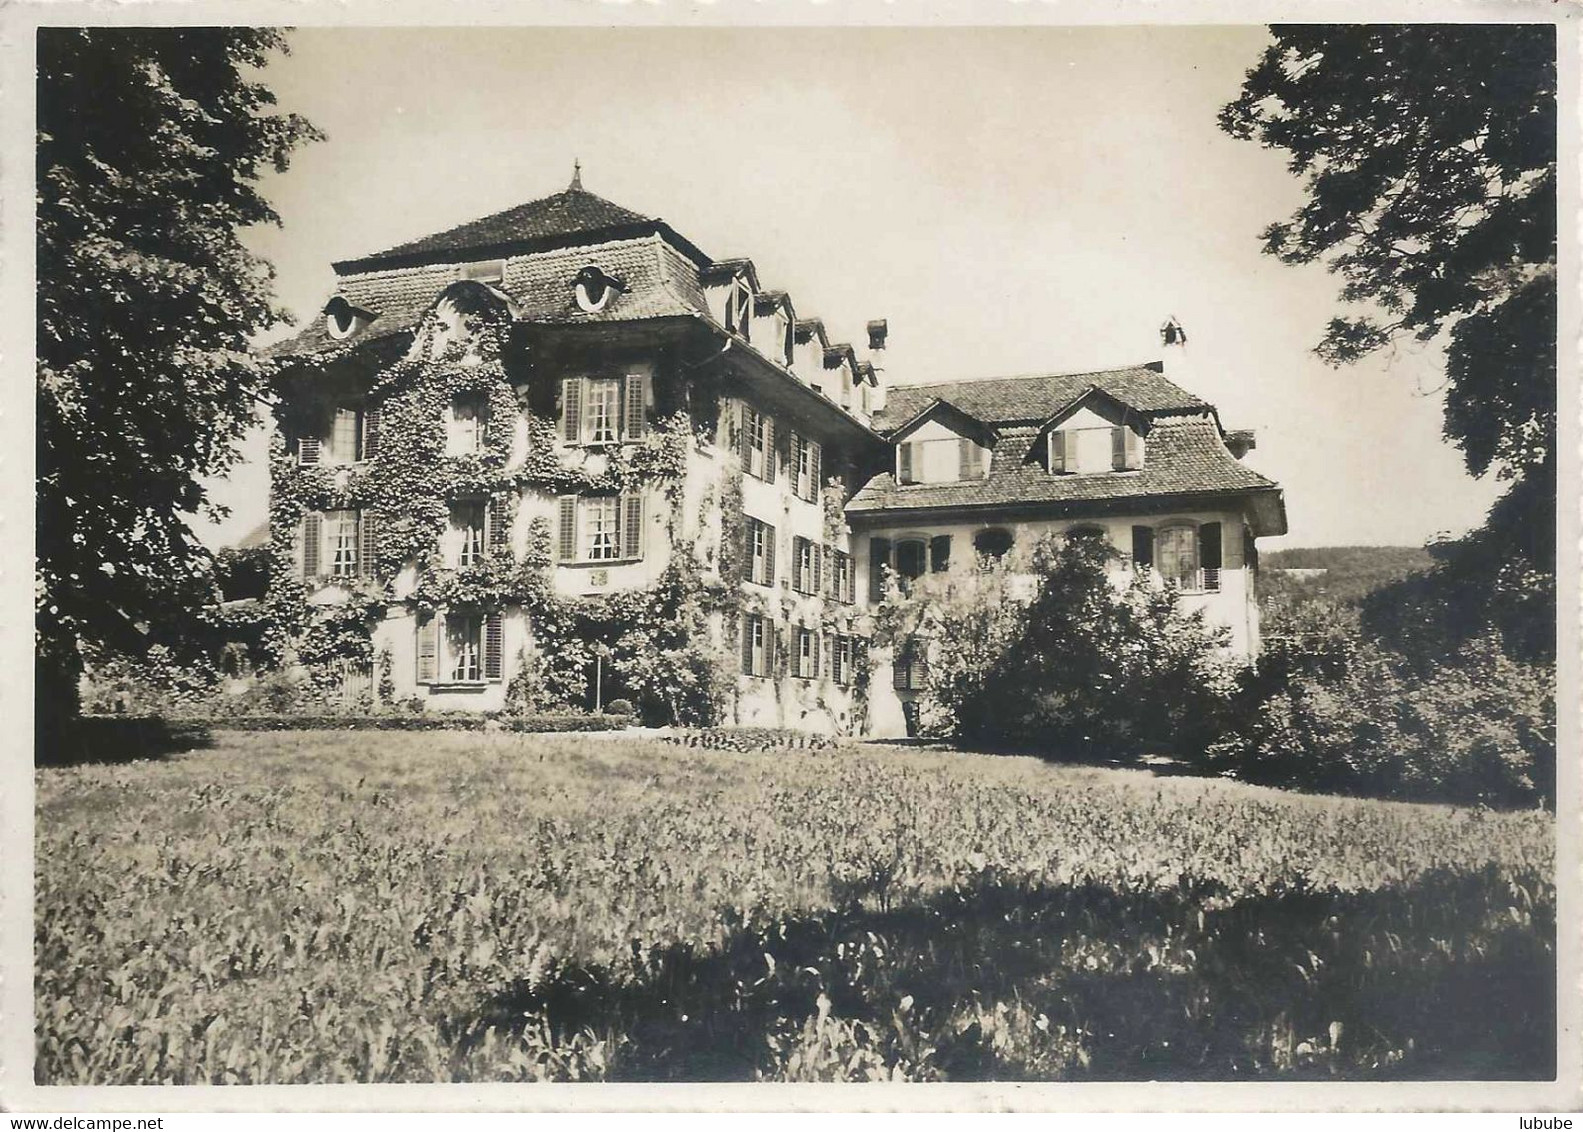 Stalden Bei Konolfingen -  Christl. Heim Schloss Hünigen  (Bahnstempel)              1949 - Konolfingen